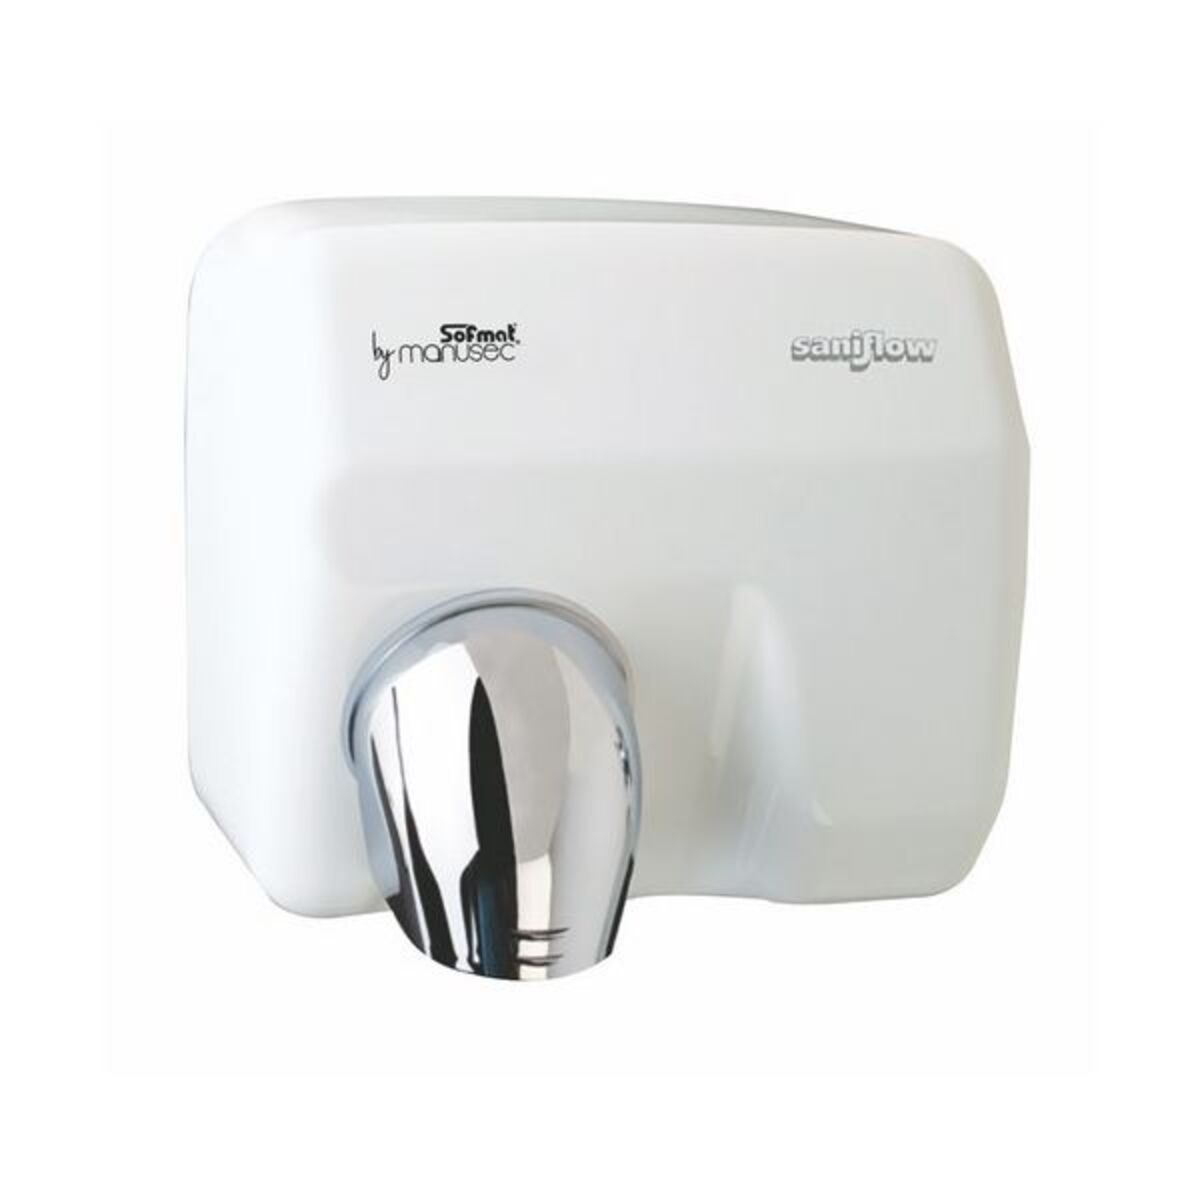 Sèche-mains saniflow automatique époxy blanc -2000w